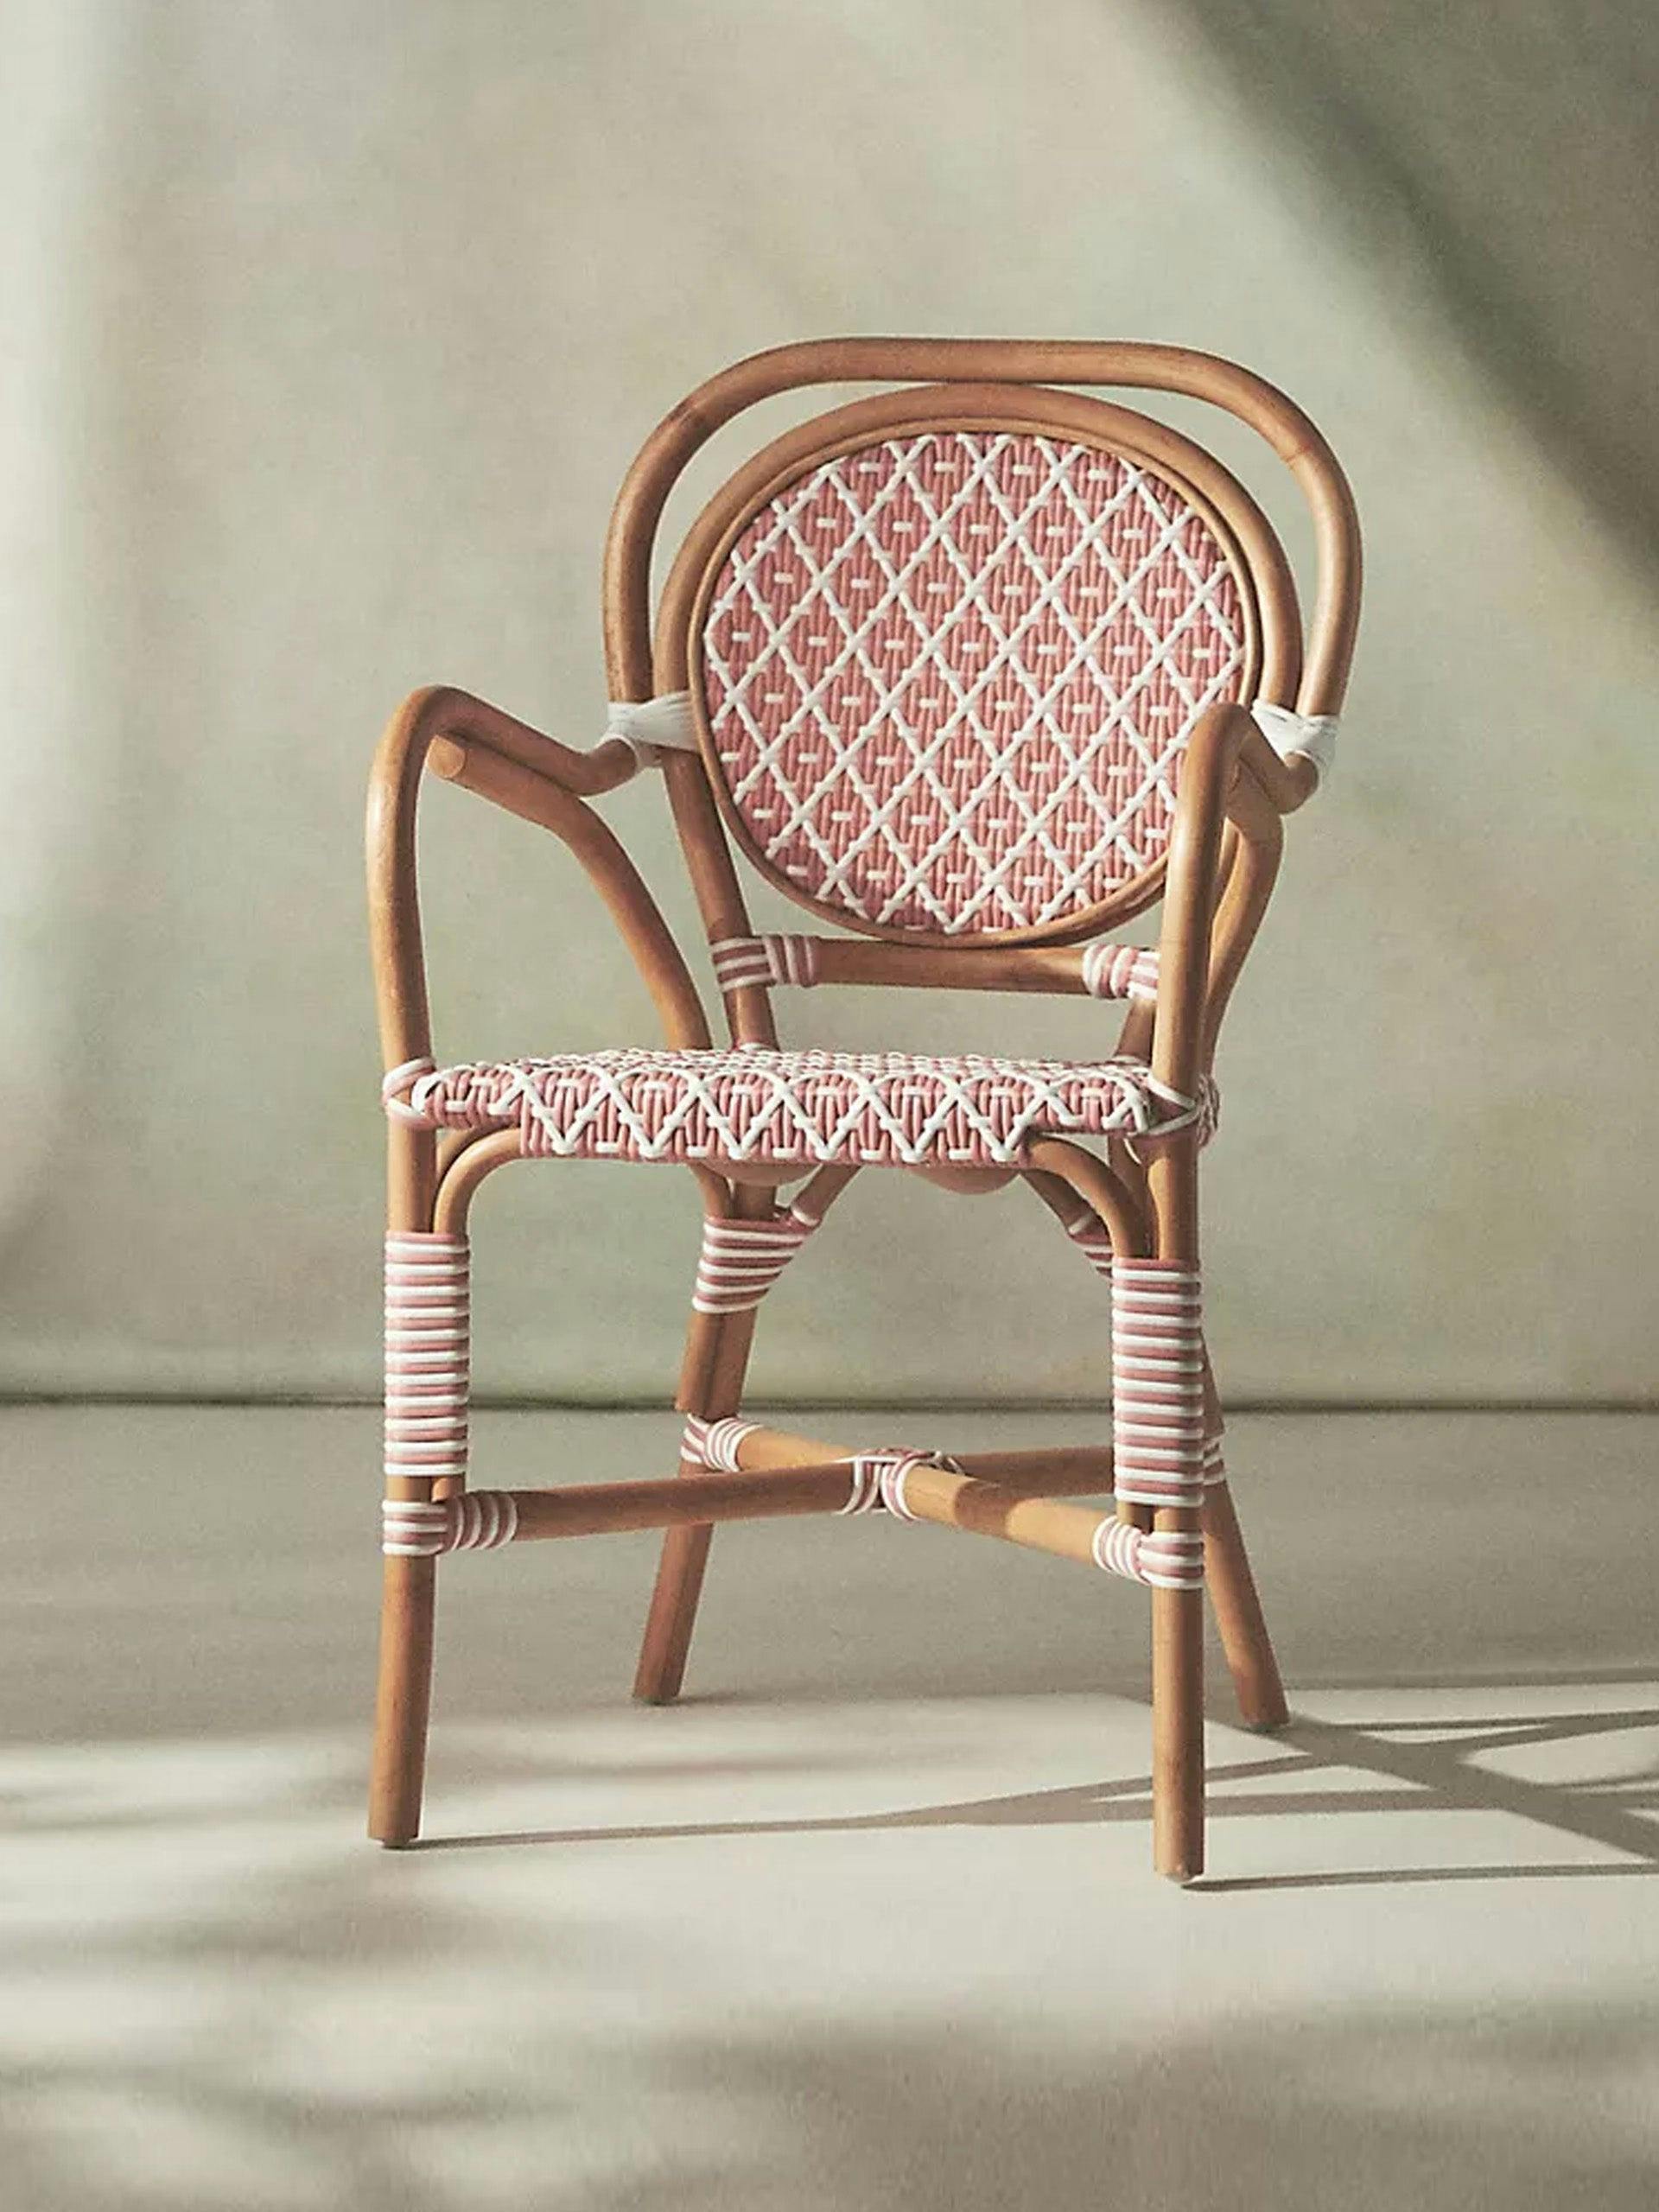 Pink rattan chair